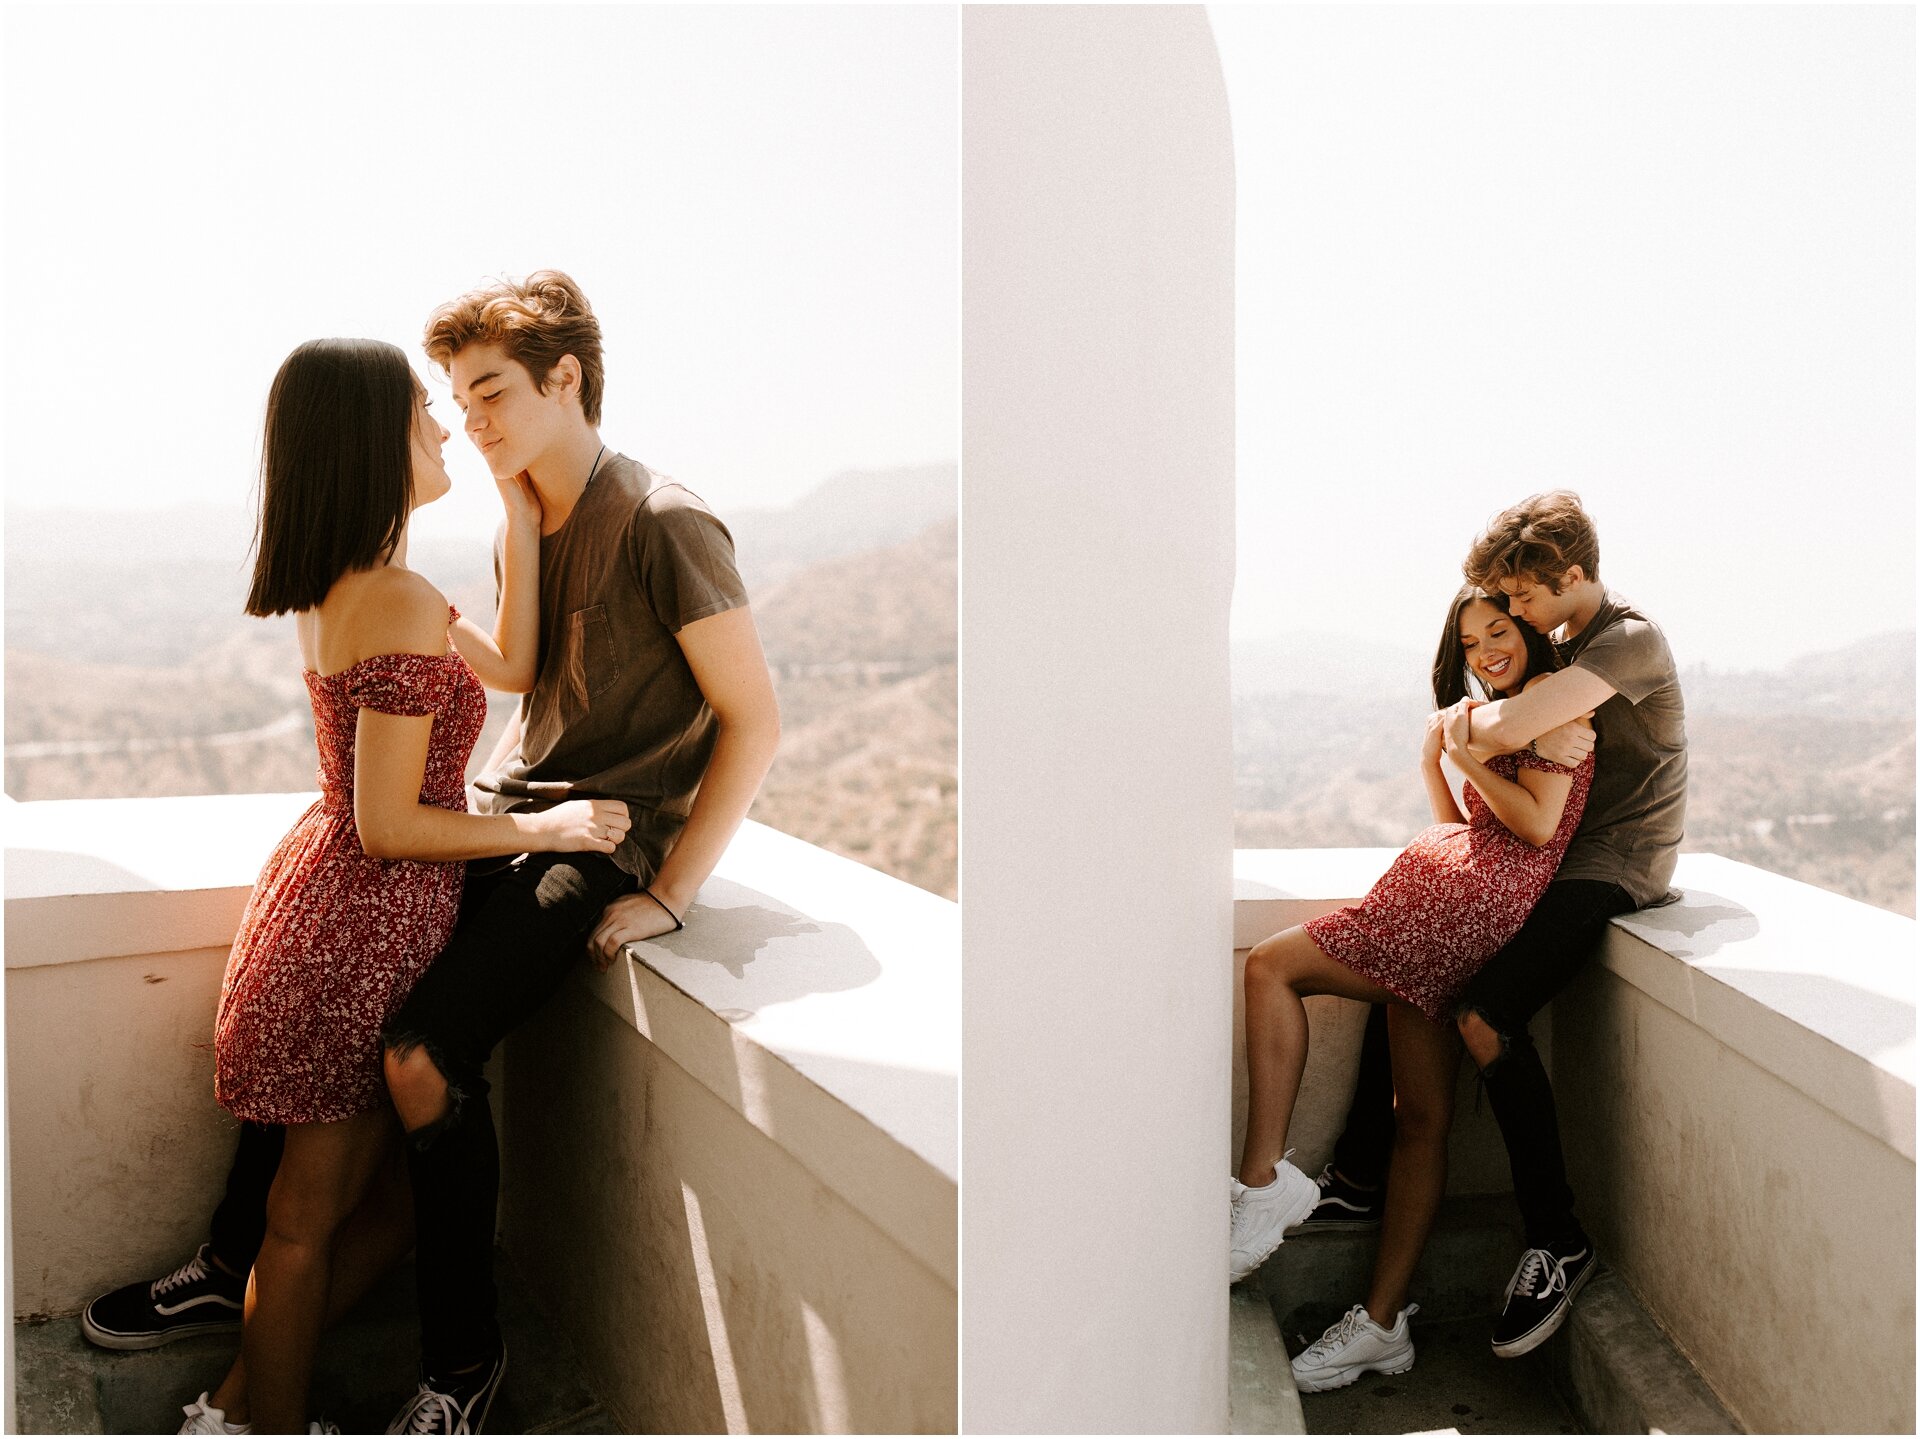 Griffith Observatory Couple Session in Los Angeles by LA Wedding Photographer Saul Cervantes - Tori & Matt-4.jpg